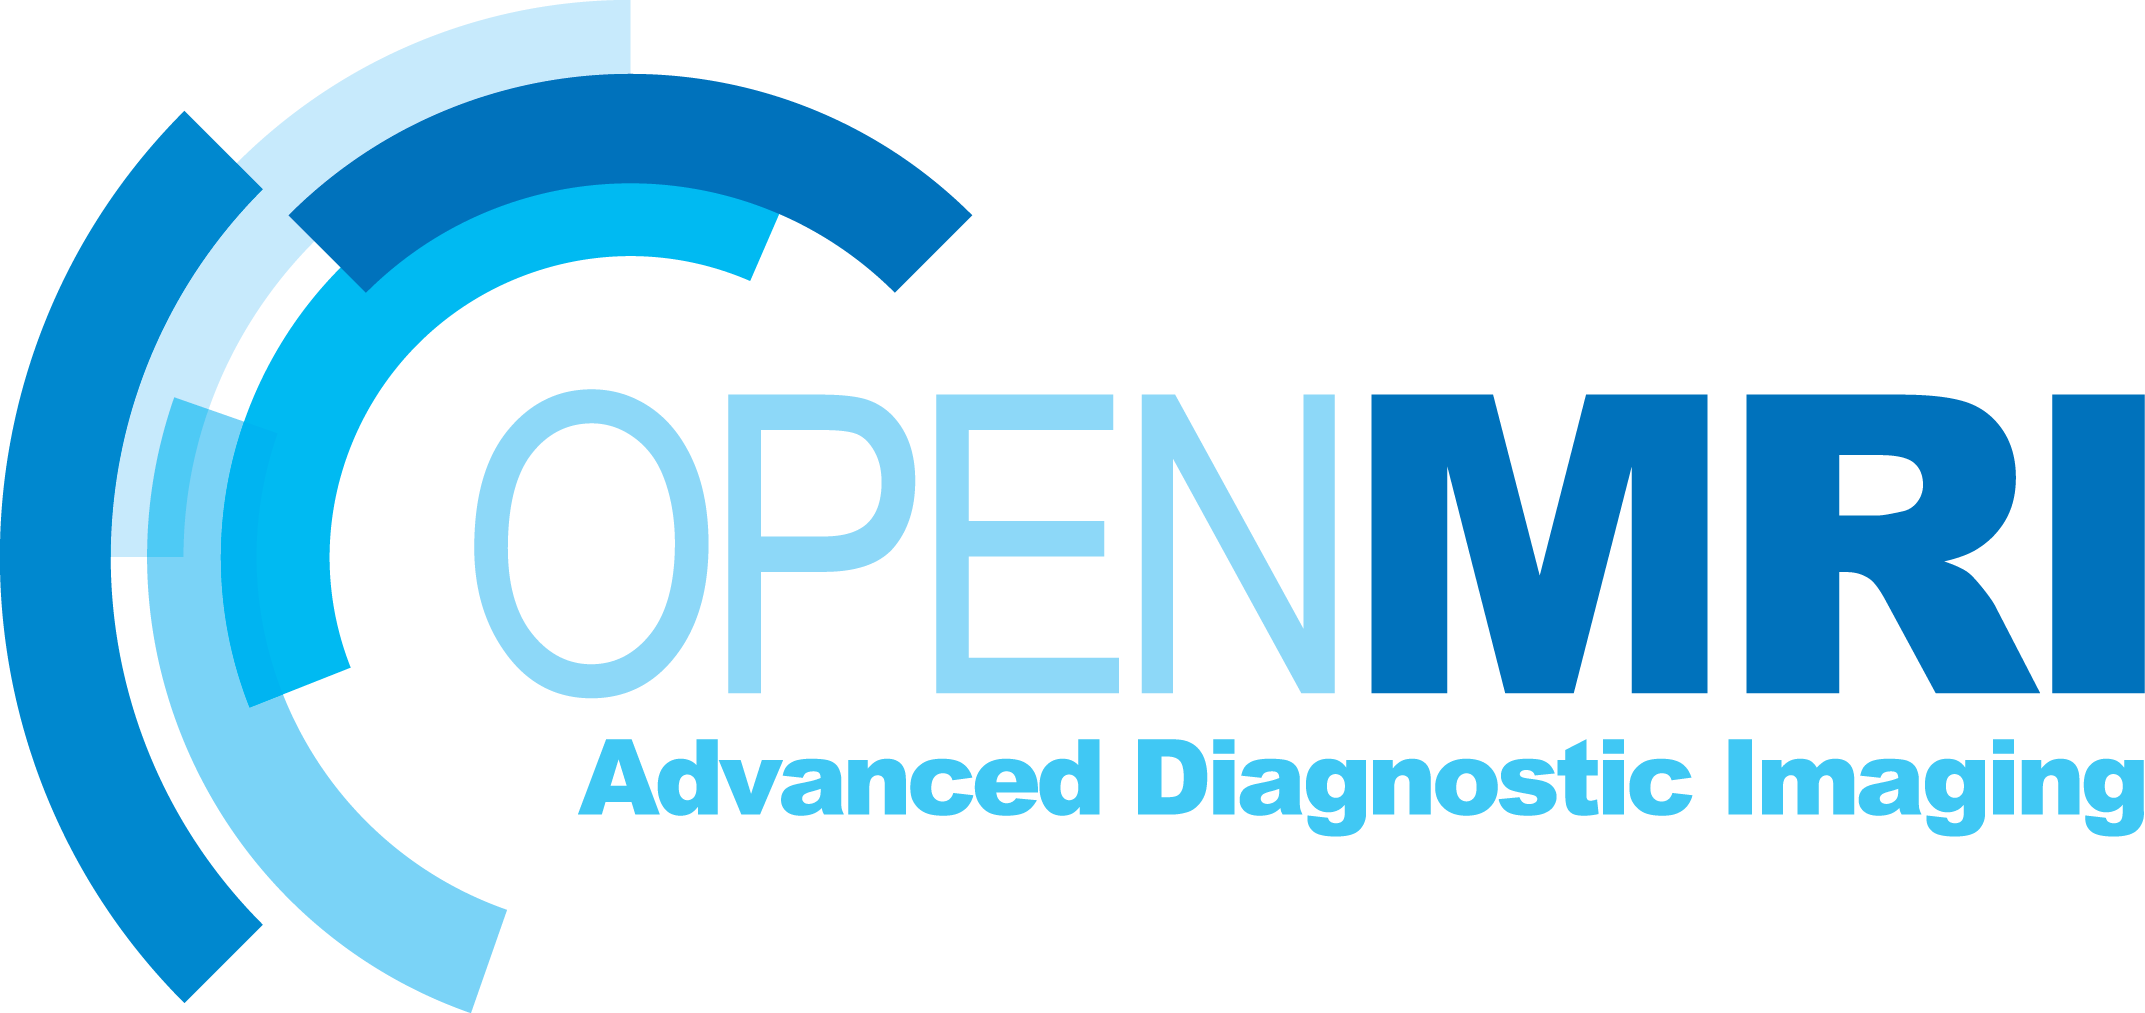 Open MRI 17 - Advanced Diagnostic Imaging of NJ Logo